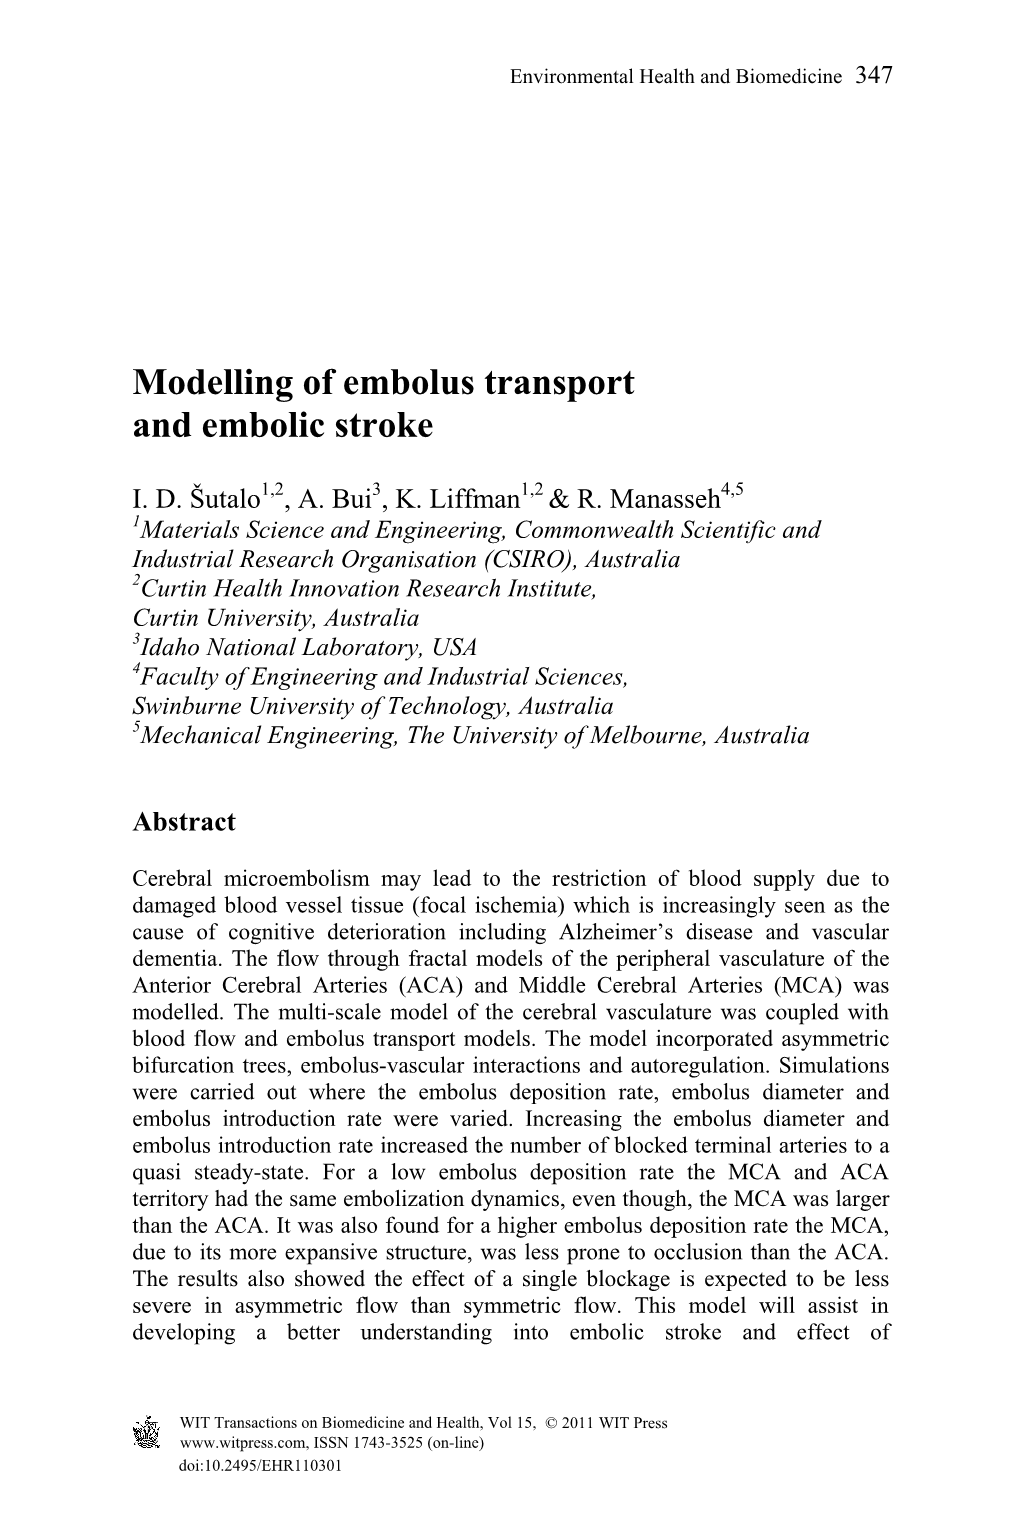 Modelling of Embolus Transport and Embolic Stroke